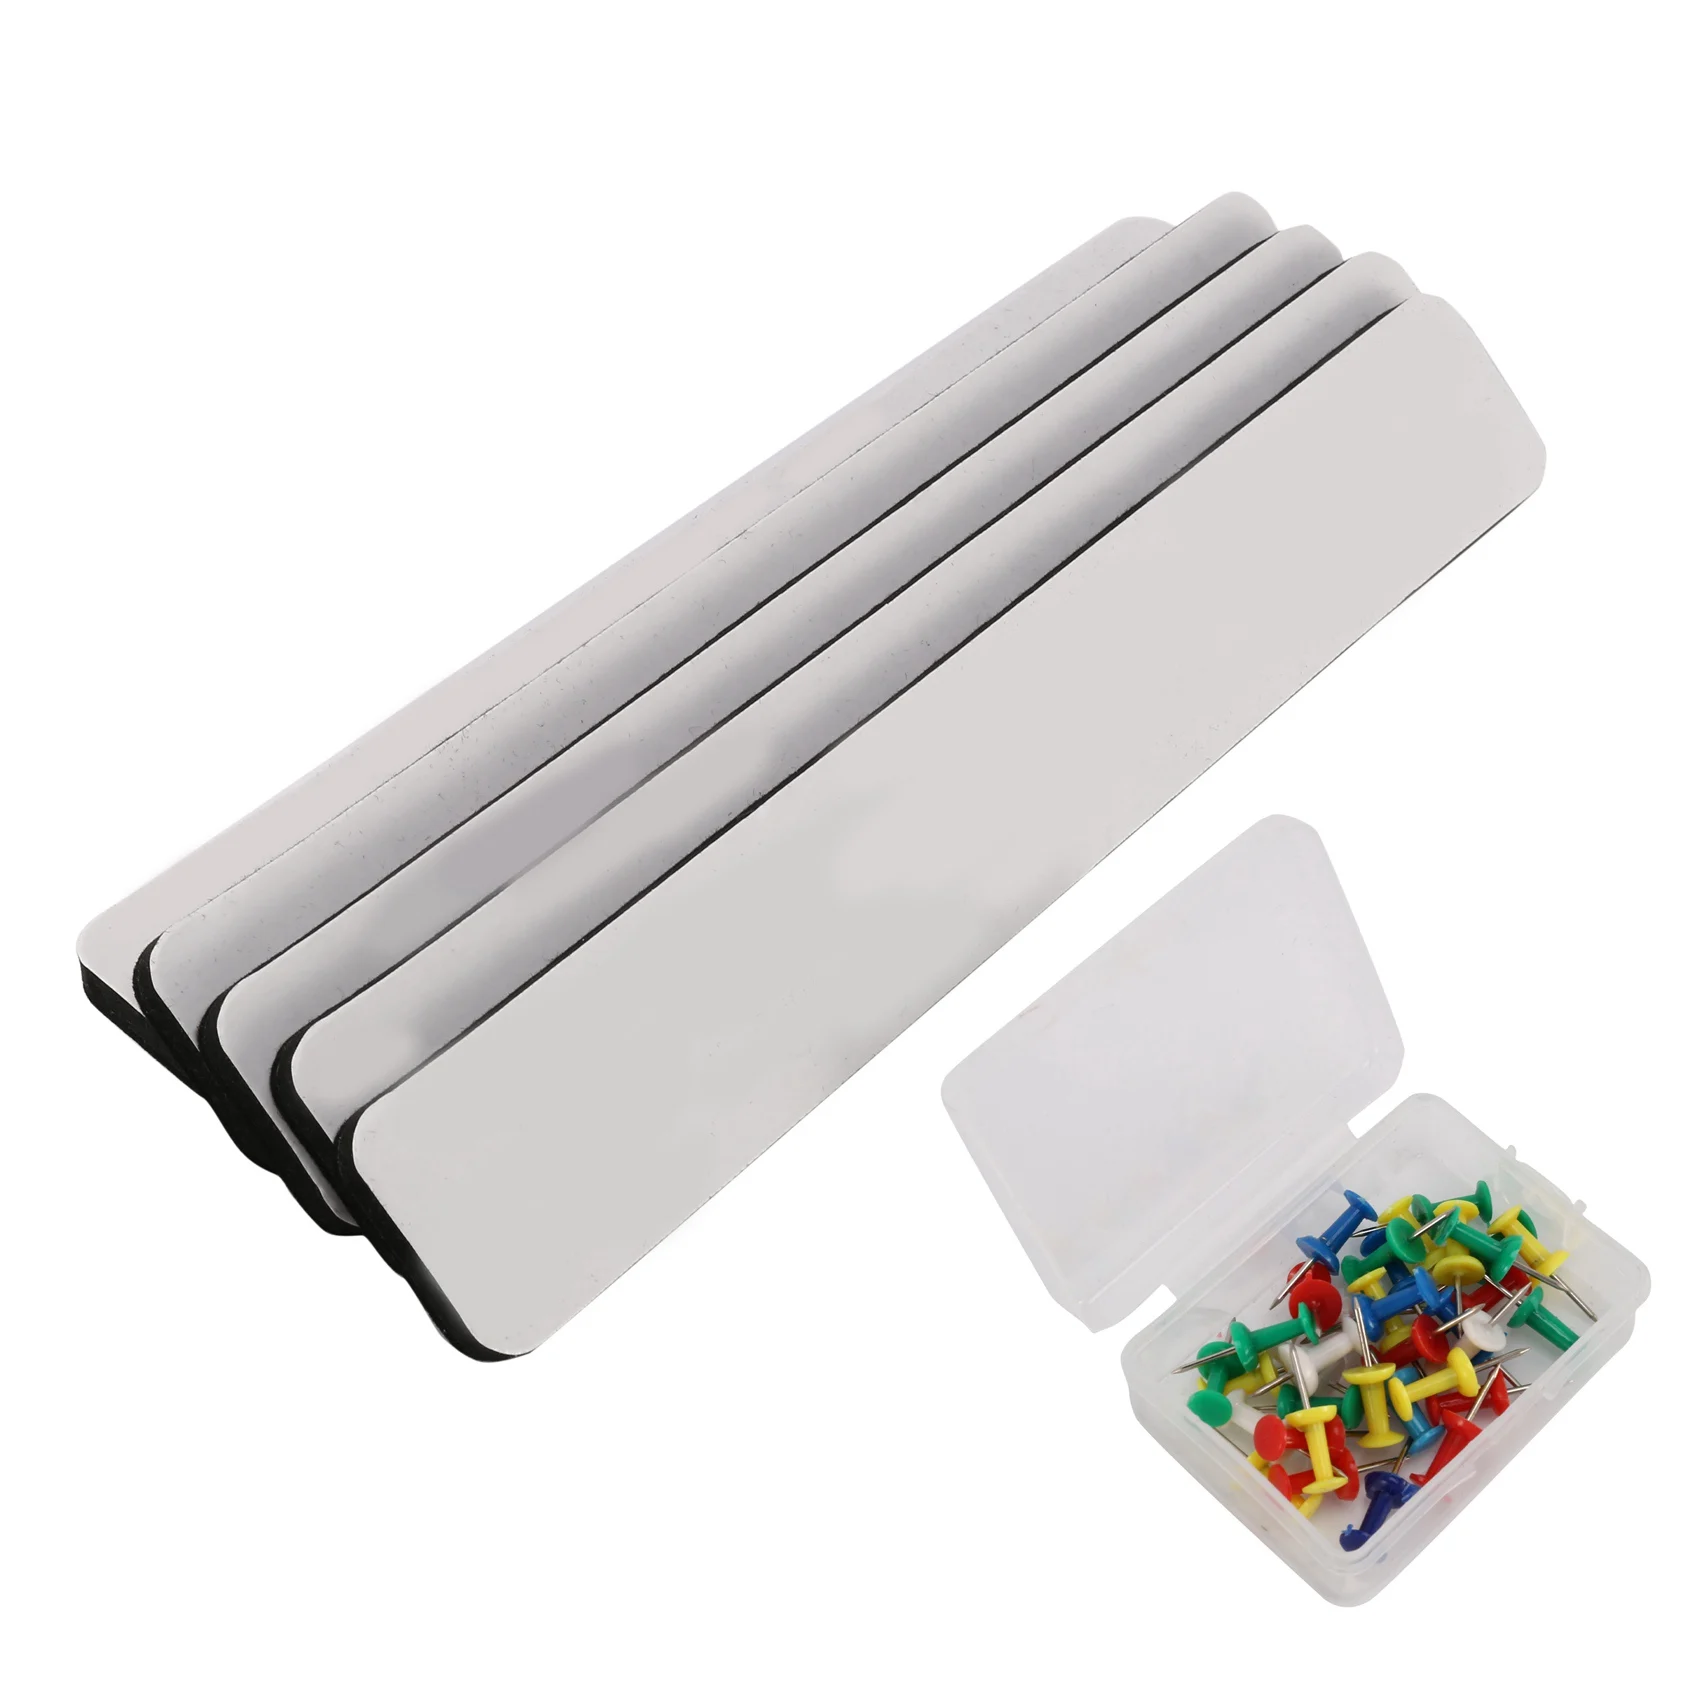 

Combo Bulletin Board Strips - 5 Black Self Adhesive Backing Magnetic Metal Felt Push Pin Bars,Home Office Memo